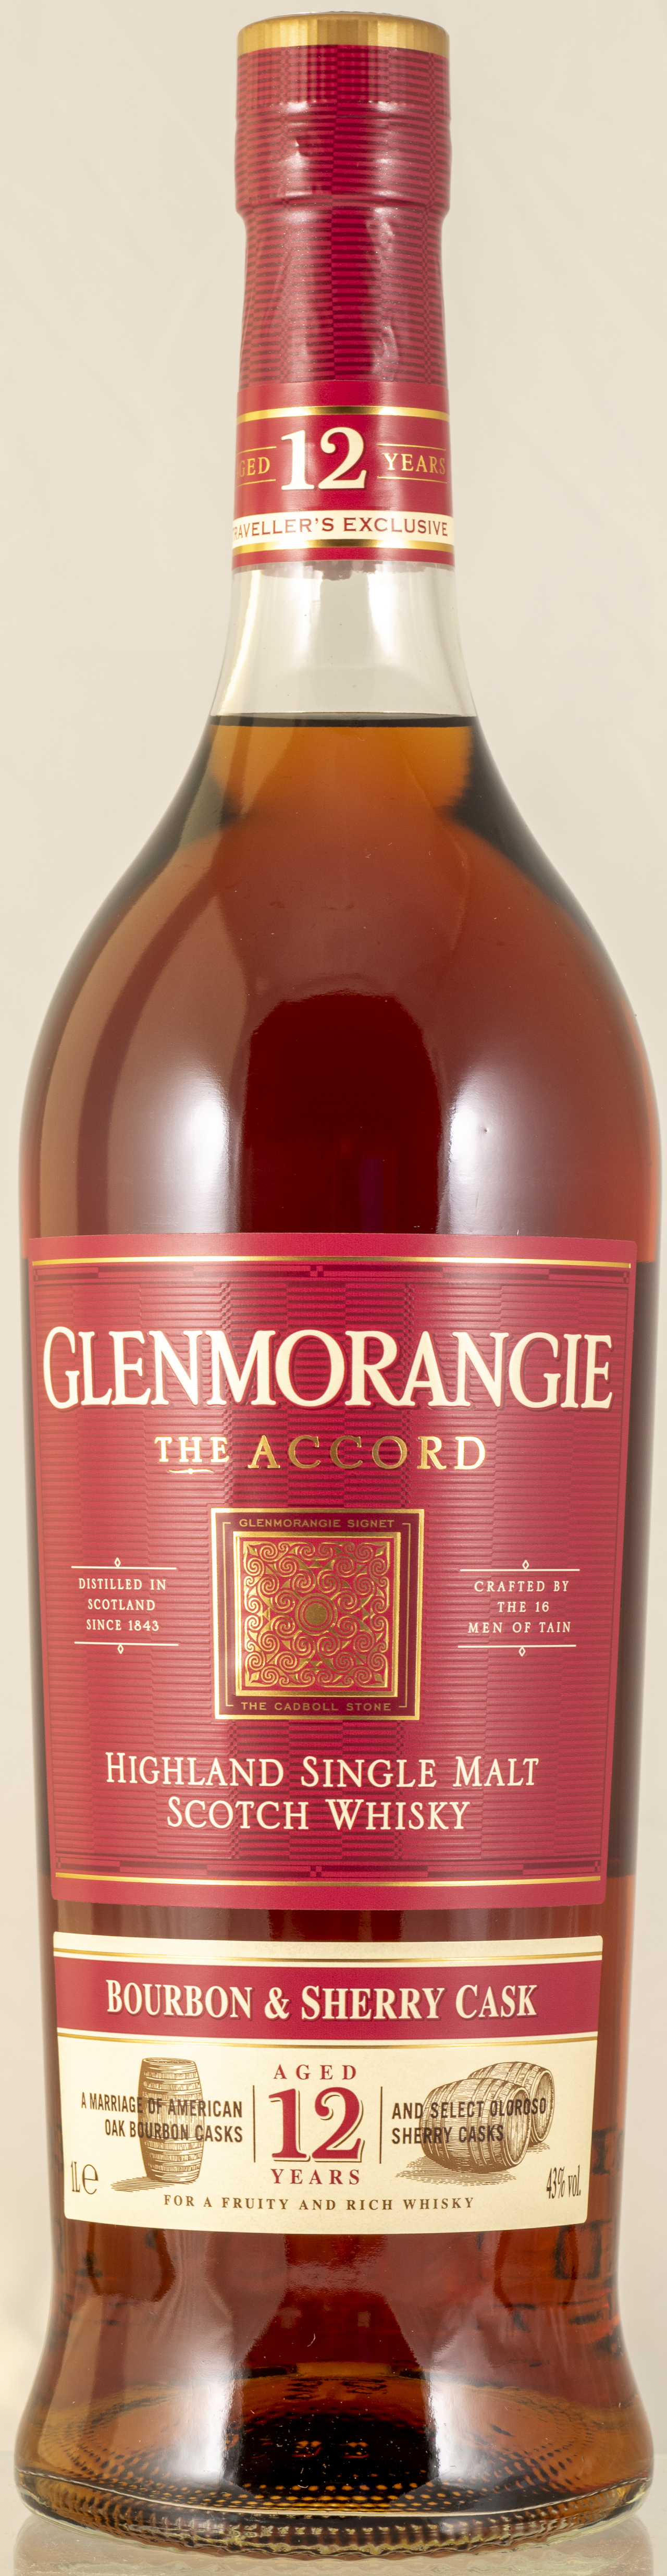 Billede: PHC_7059 - Glenmorangie The Accord 12 - bottle front.jpg